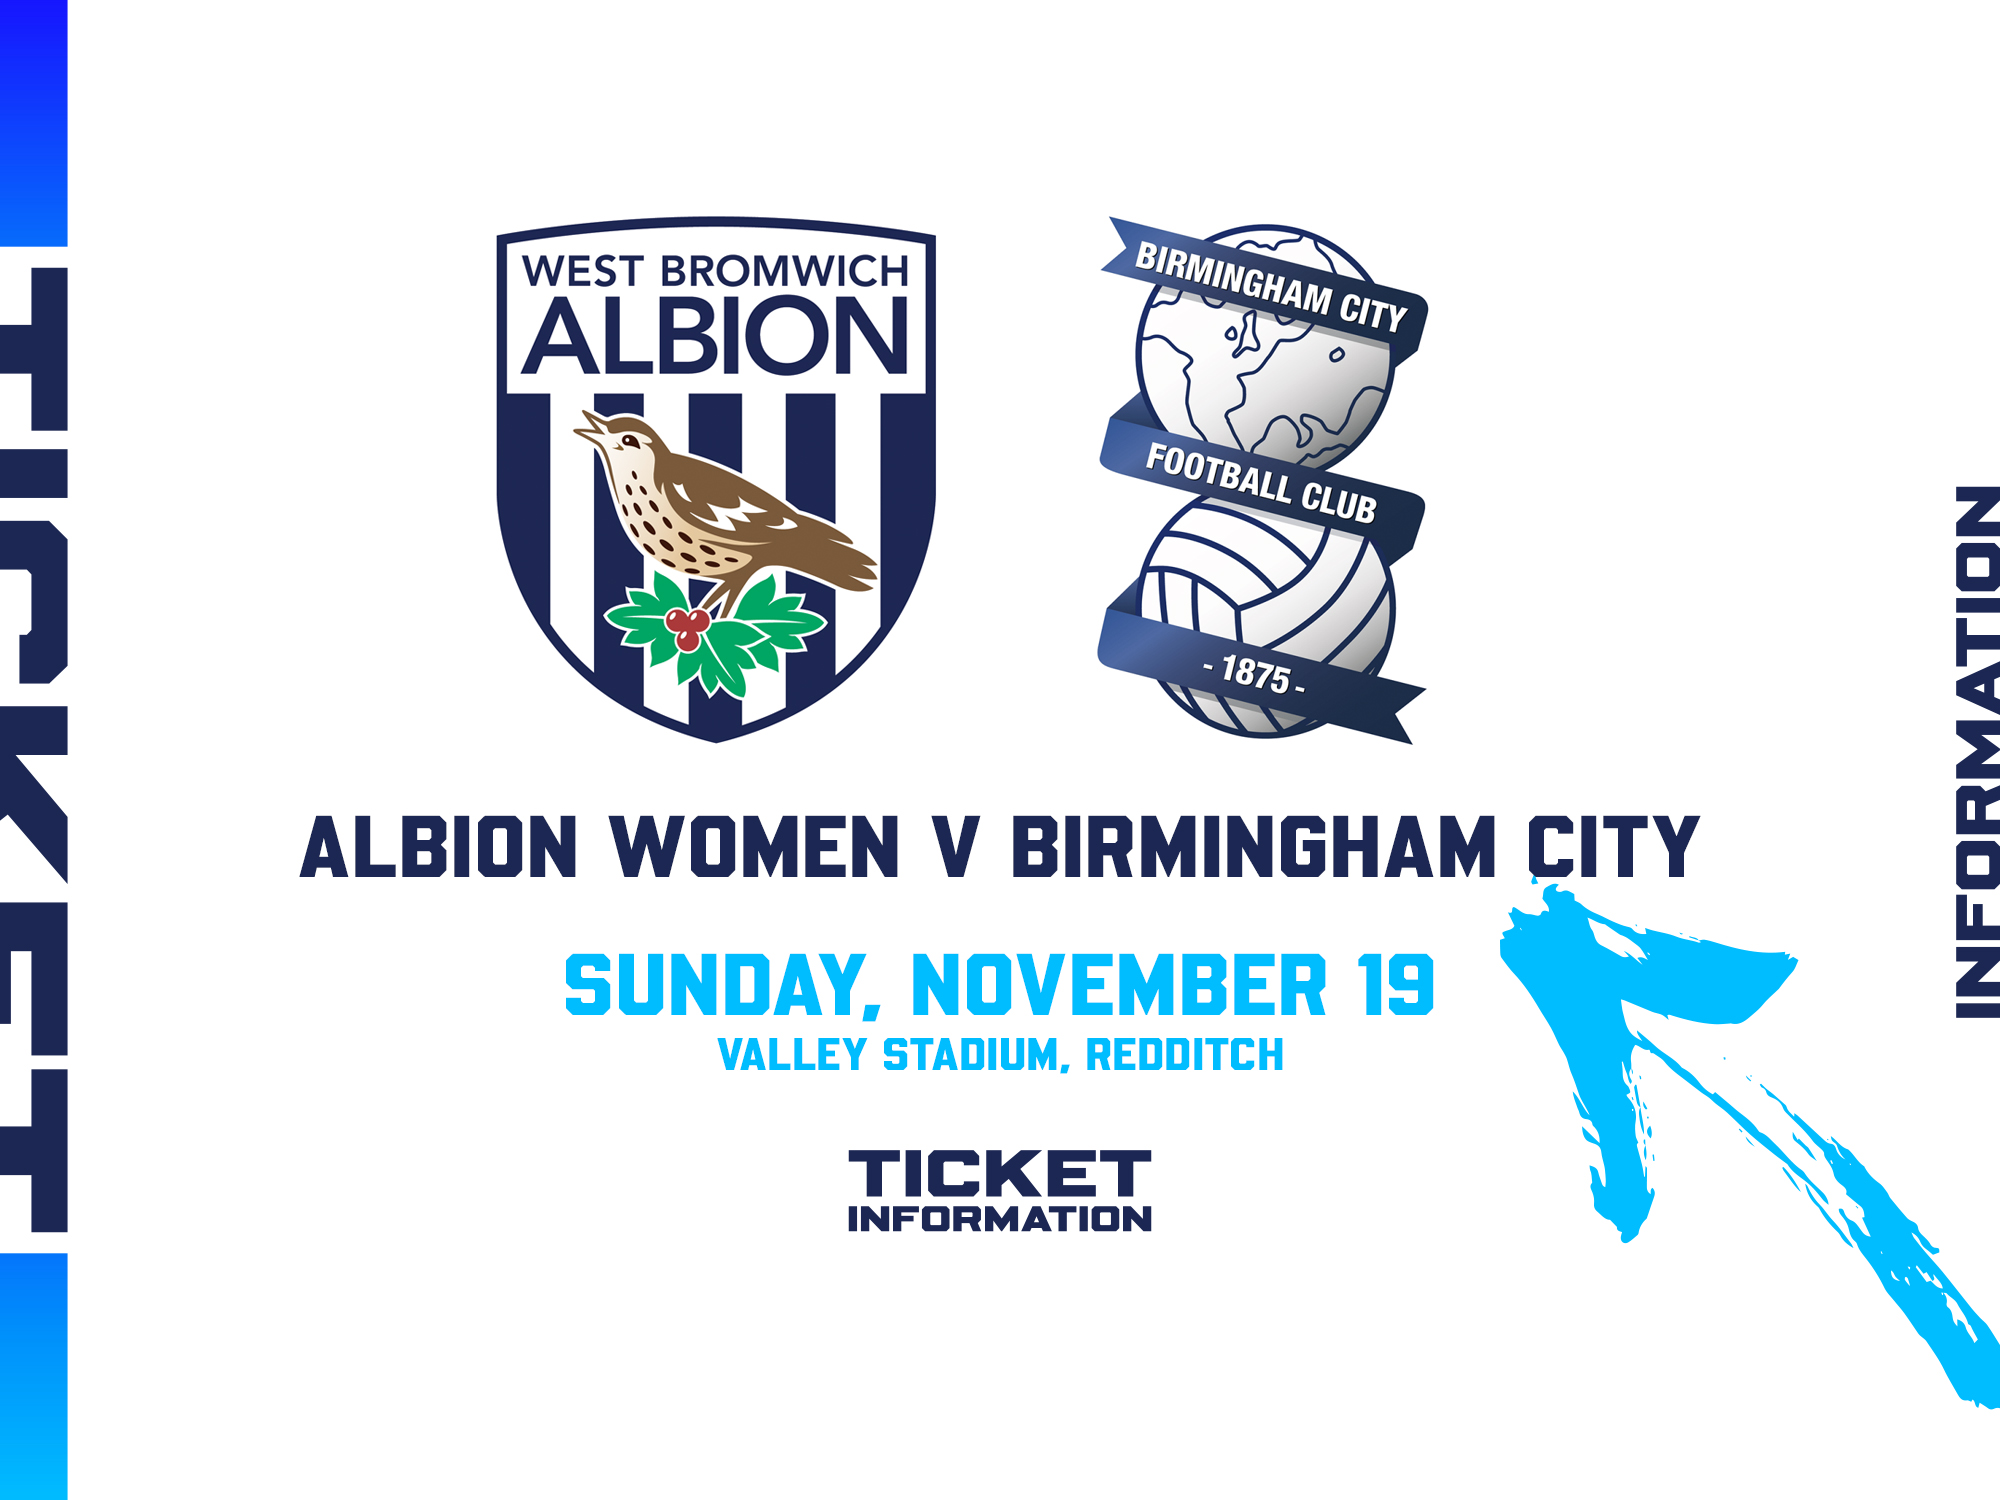 WBA Women and Birmingham City badges on the Women's ticket graphic